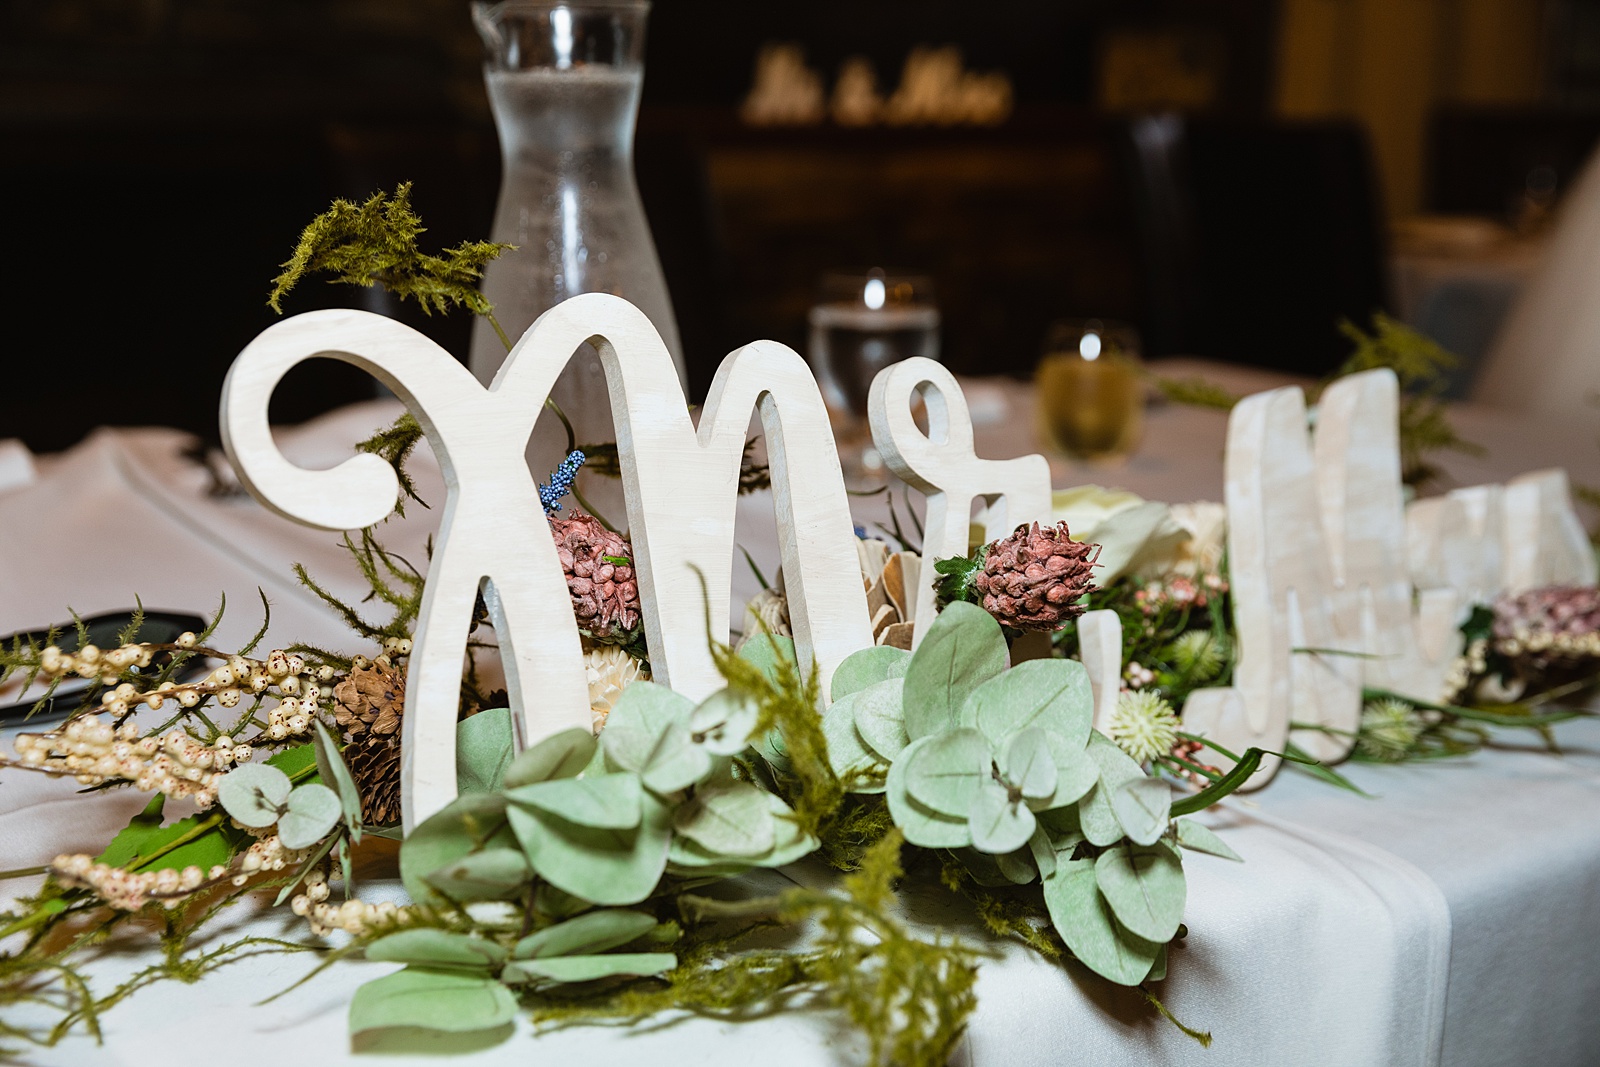 Sweetheart table at Timo Wood Oven Wine Bar wedding reception by Arizona wedding photographer PMA Photography.